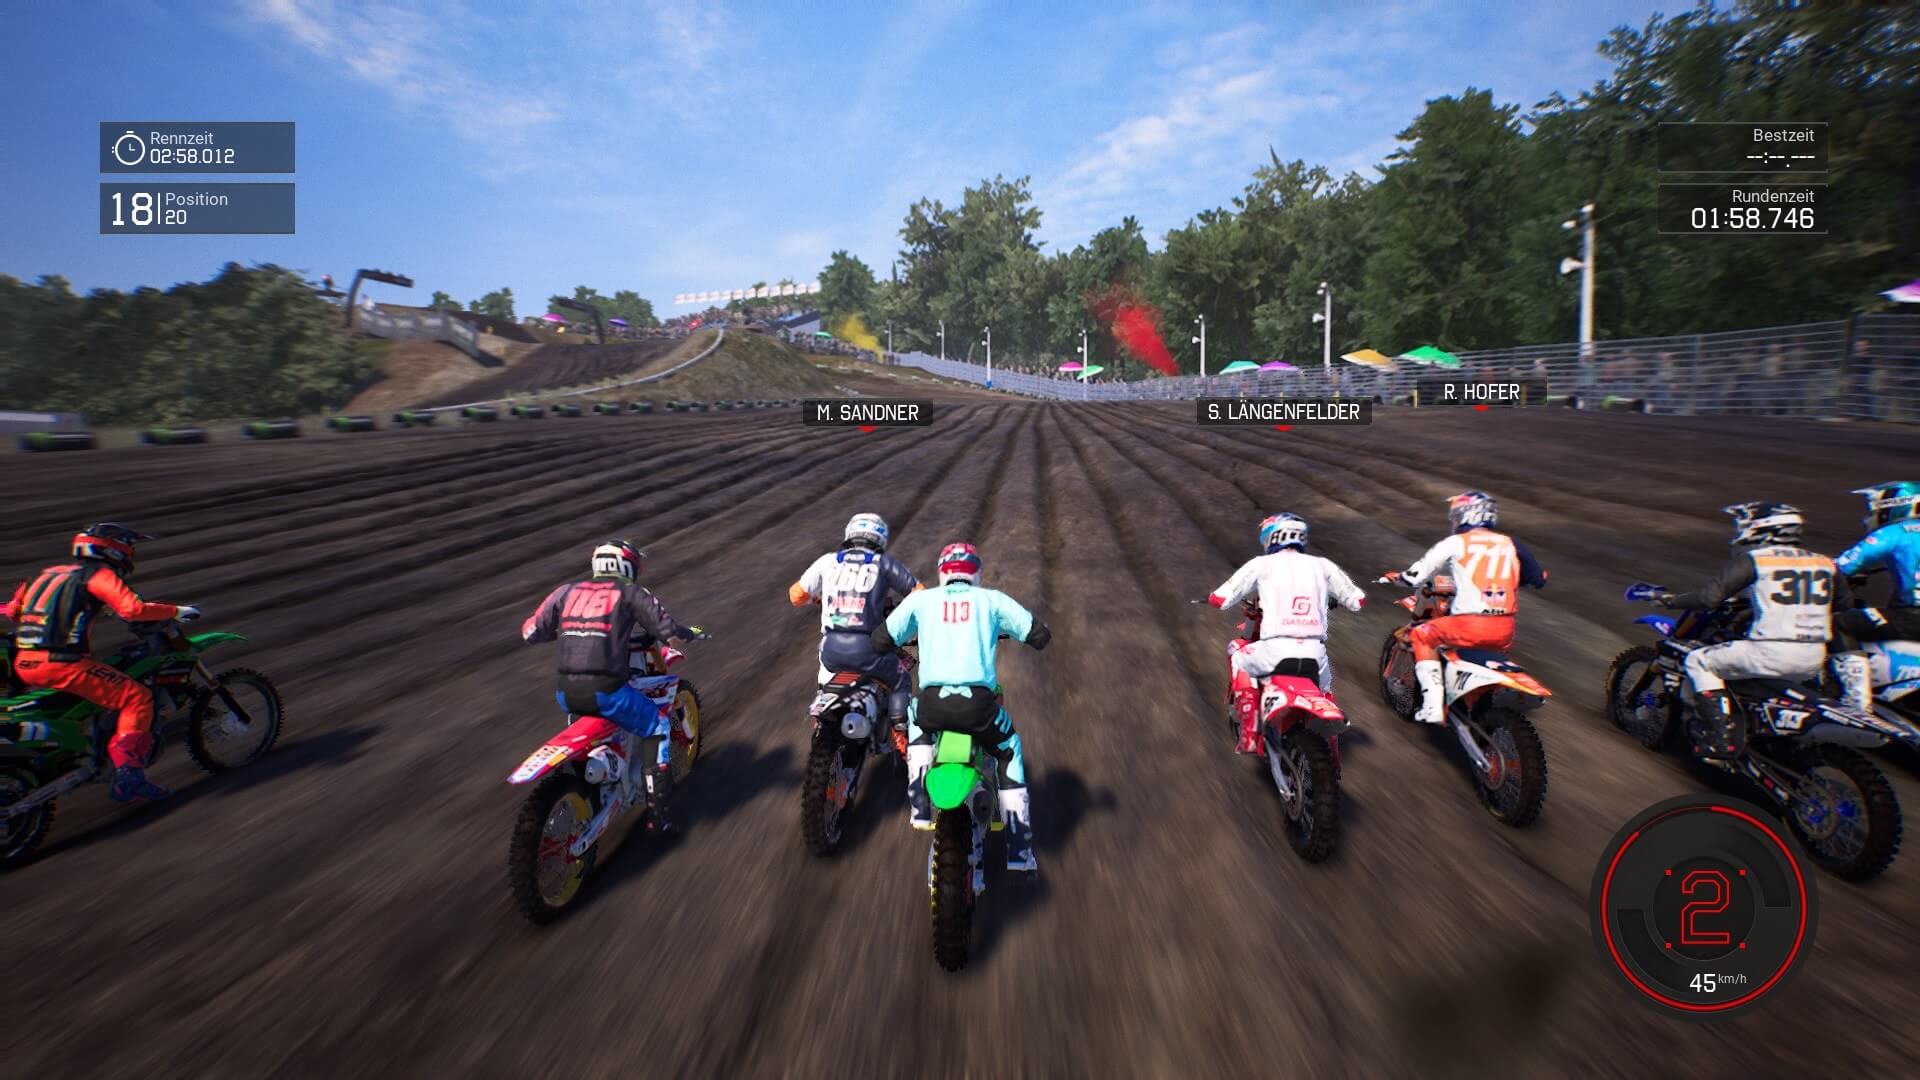 mxgp 2021 the official motocross videogame 20211211180851